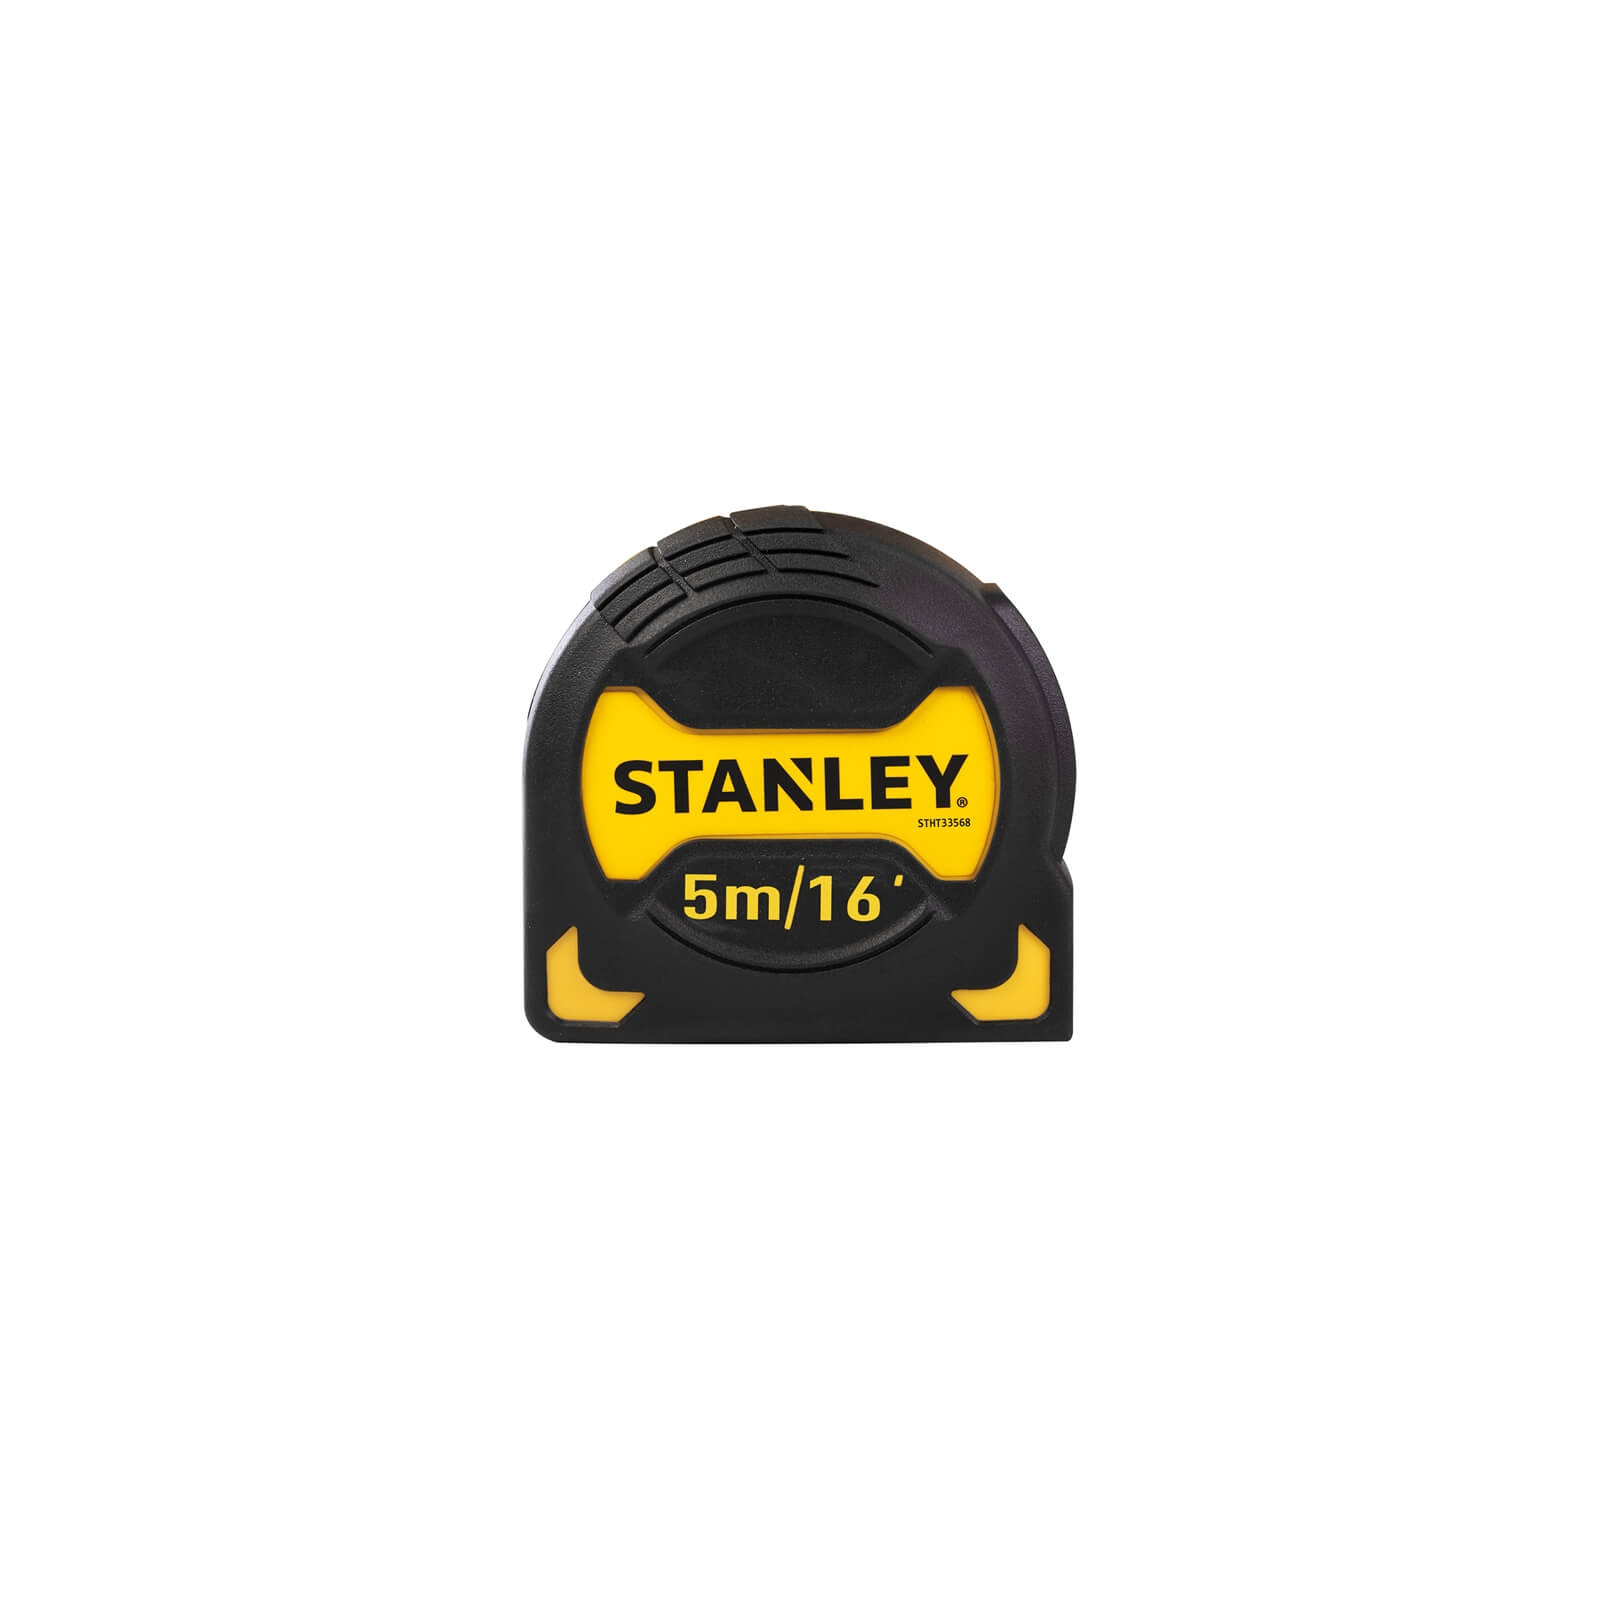 Stanley Grip Tape - 5m